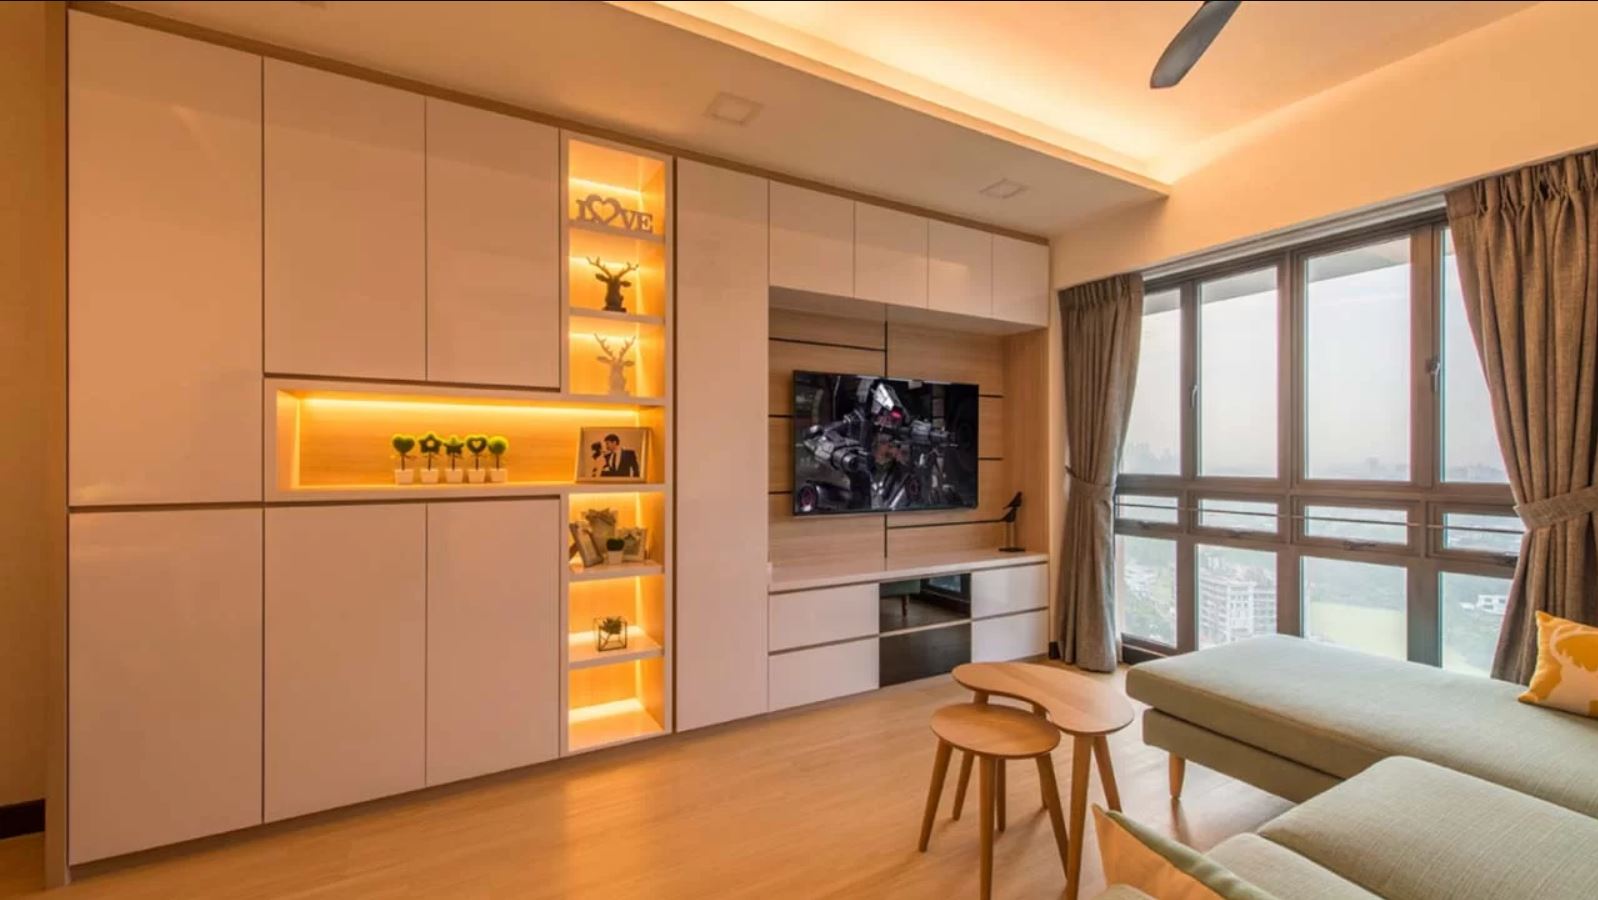 Tips for Choosing the Best Modern Designer Furniture in Singapore